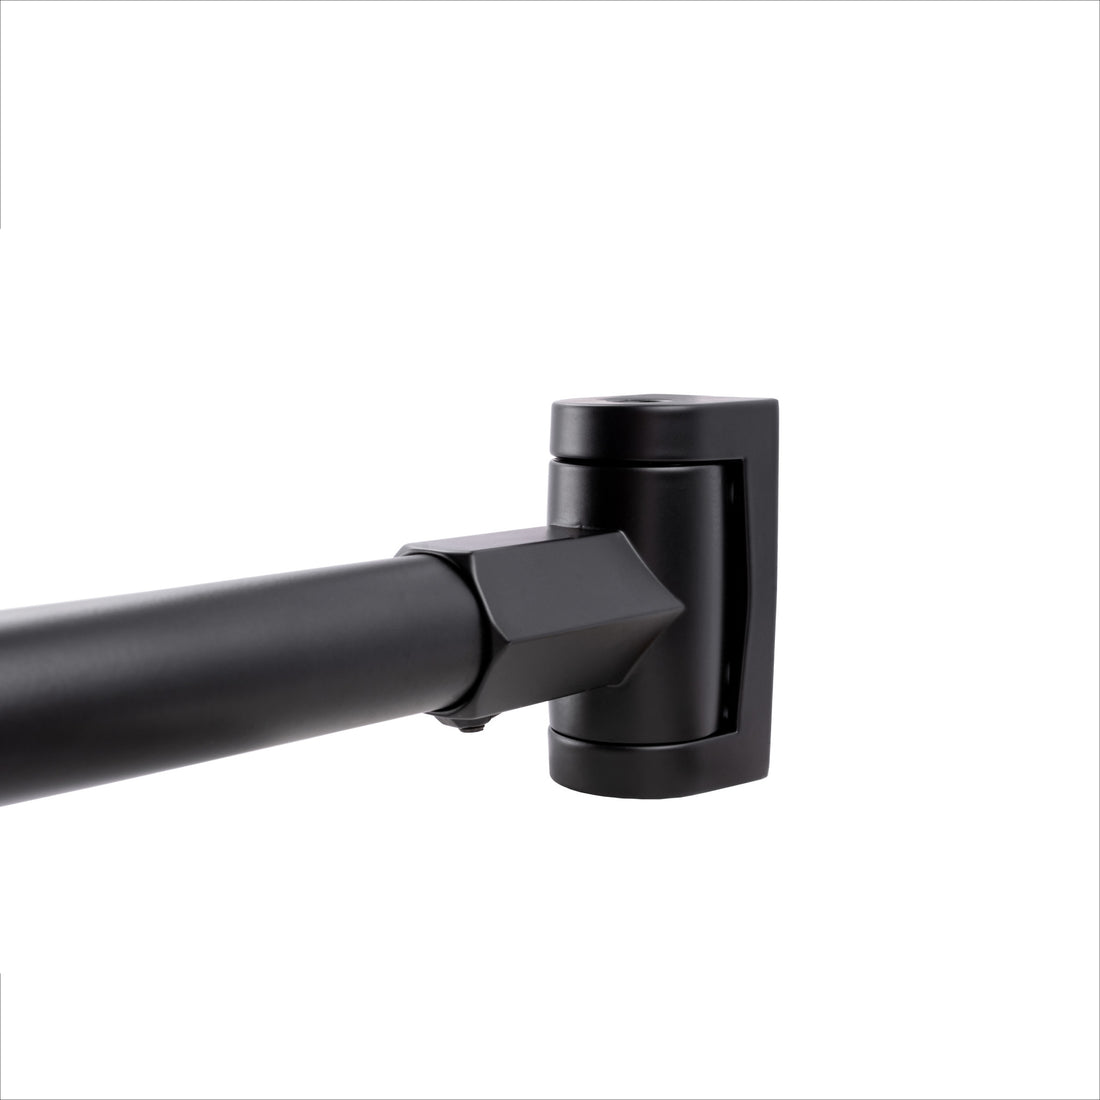 36 in. to 61 in. Curved Shower Rod (Black Finish) - Utility sinks vanites Tehila